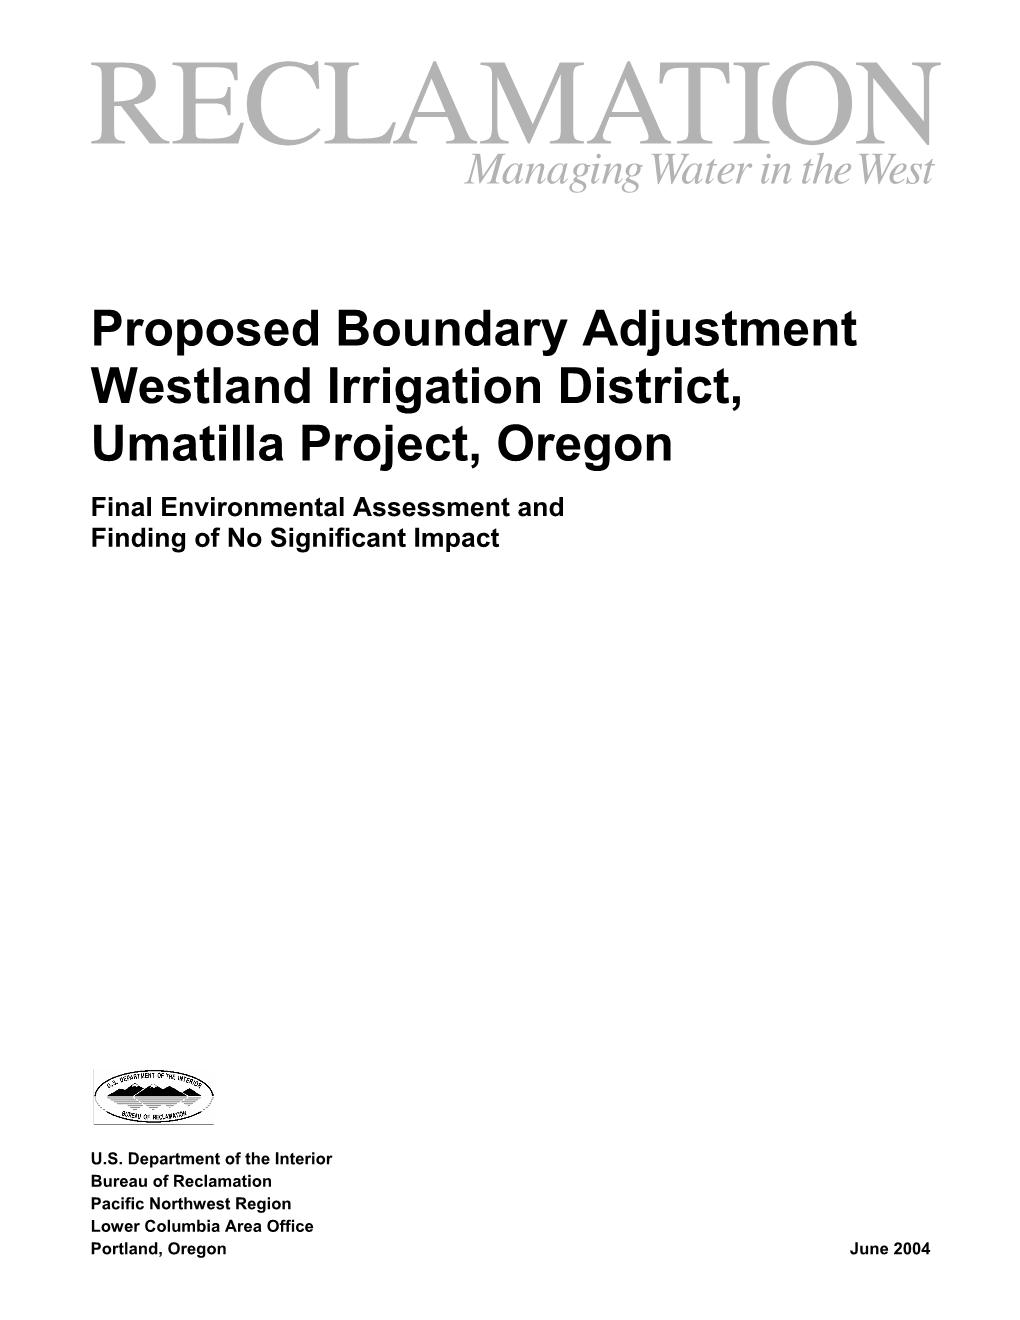 Proposed Boundary Adjustment for Westland Irrigation District FONSI